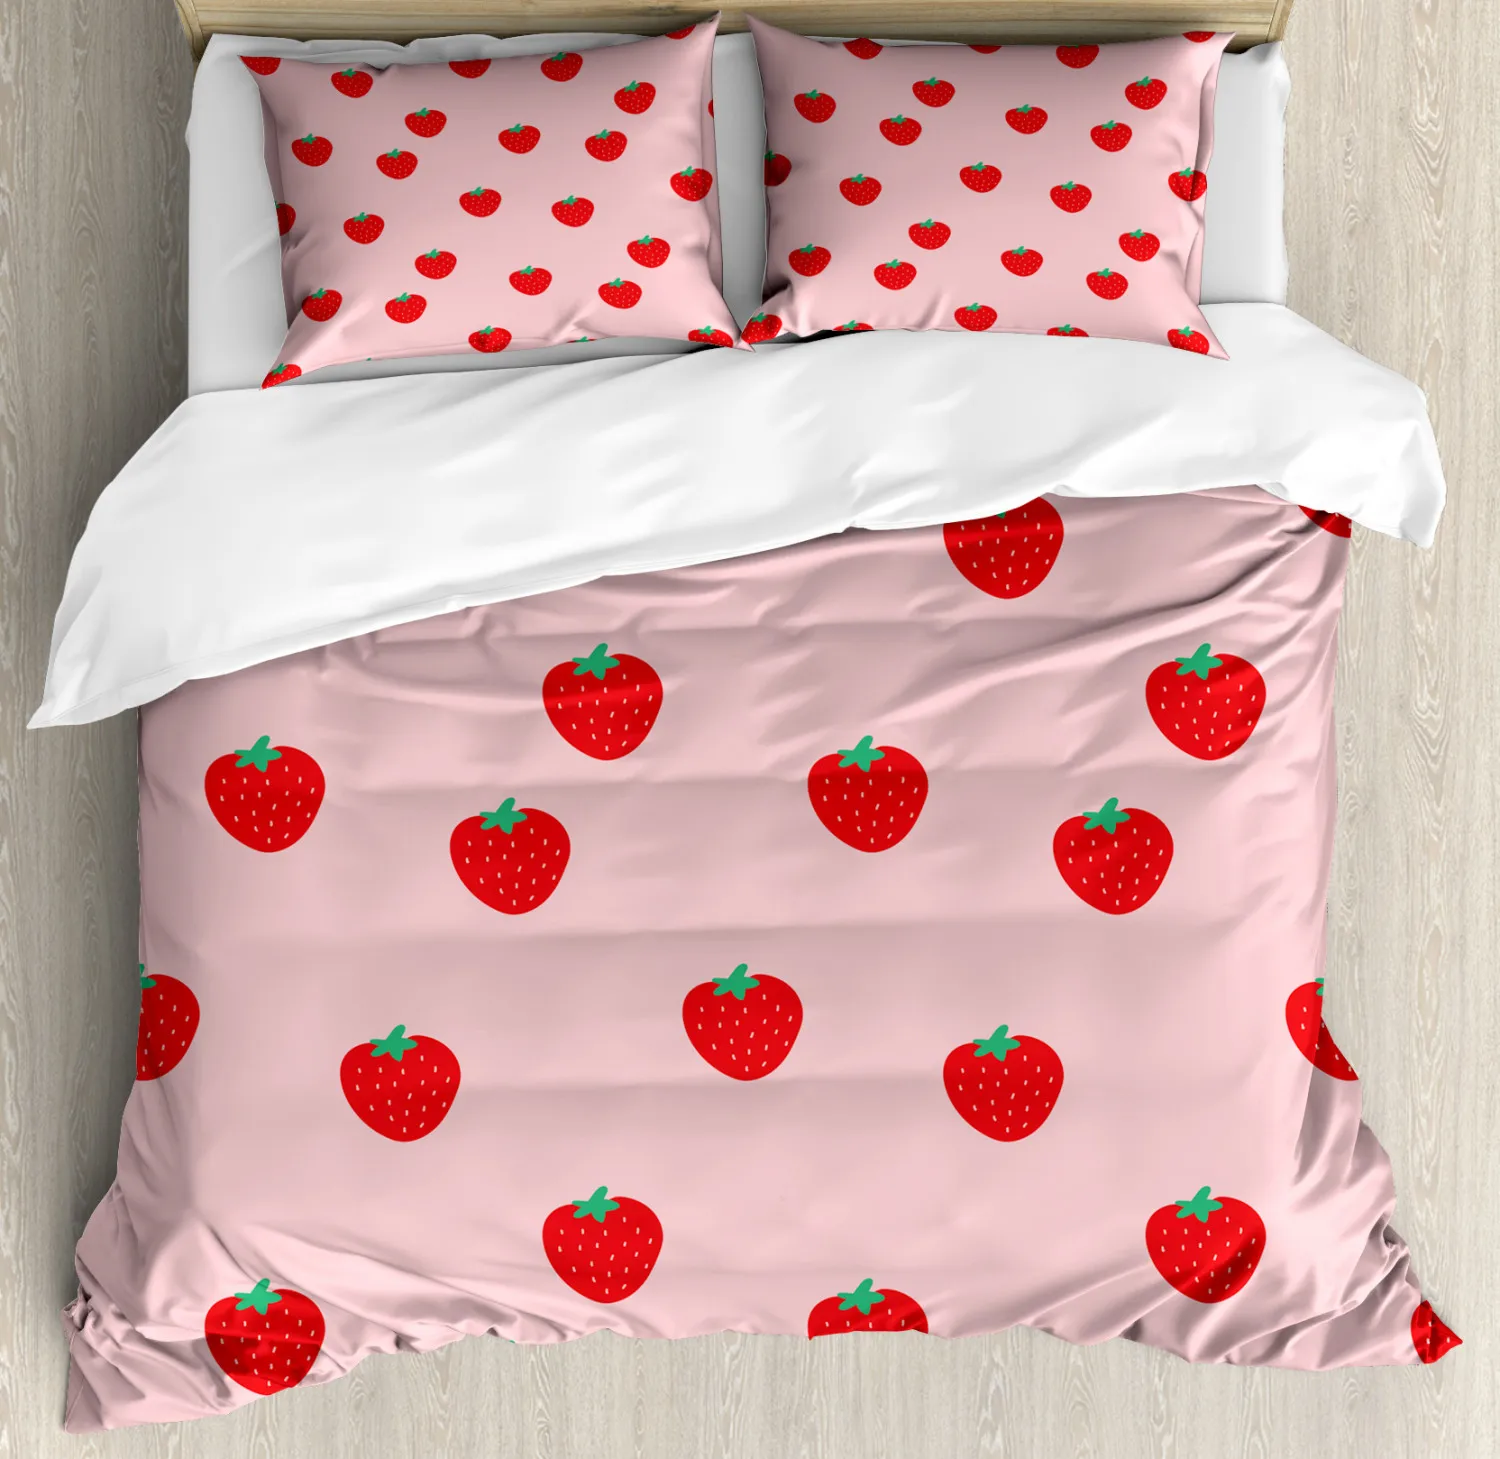 

Fruit Duvet Cover King/Queen/Full Size Summer Organic Strawberry Fruits Quilt CoverTeen Girls Lovely Polyester Bedding Set Pink